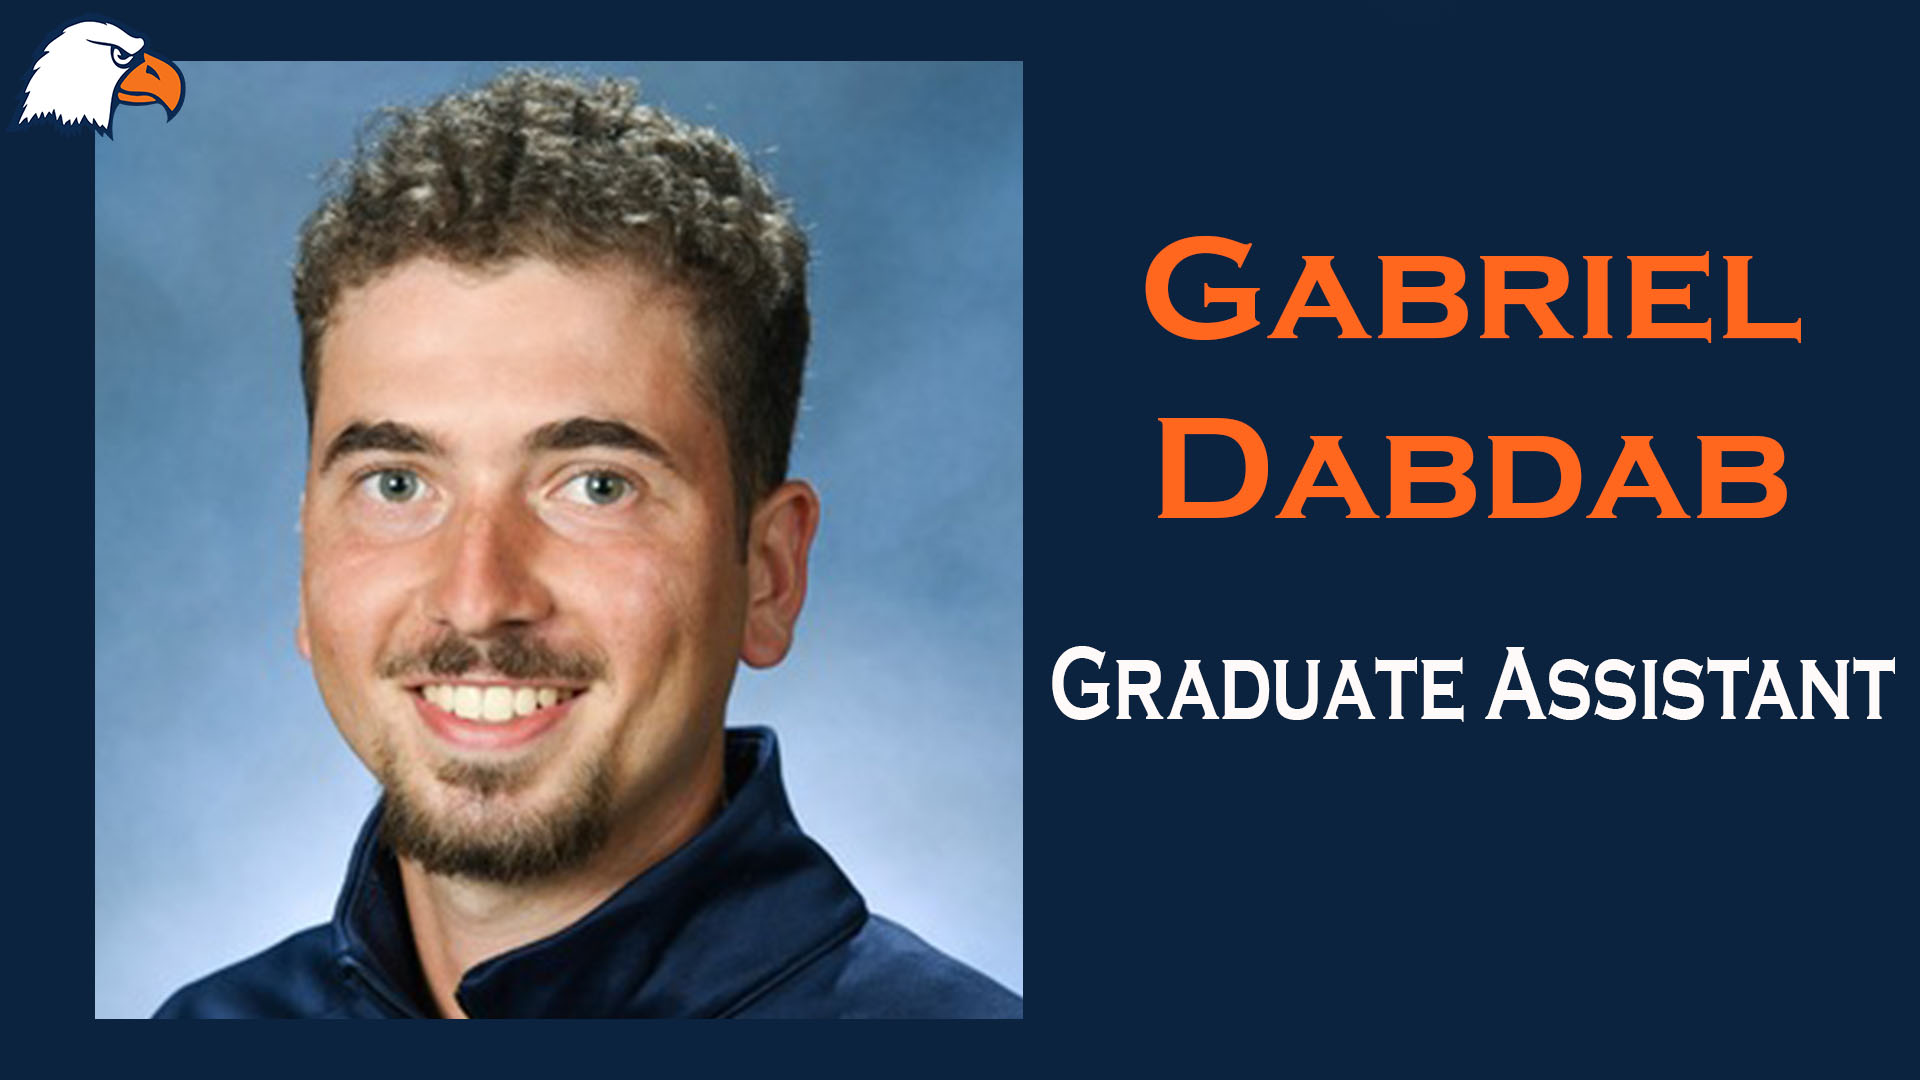 Gabriel Dabdab joins Frederick's staff as Graduate Assistant